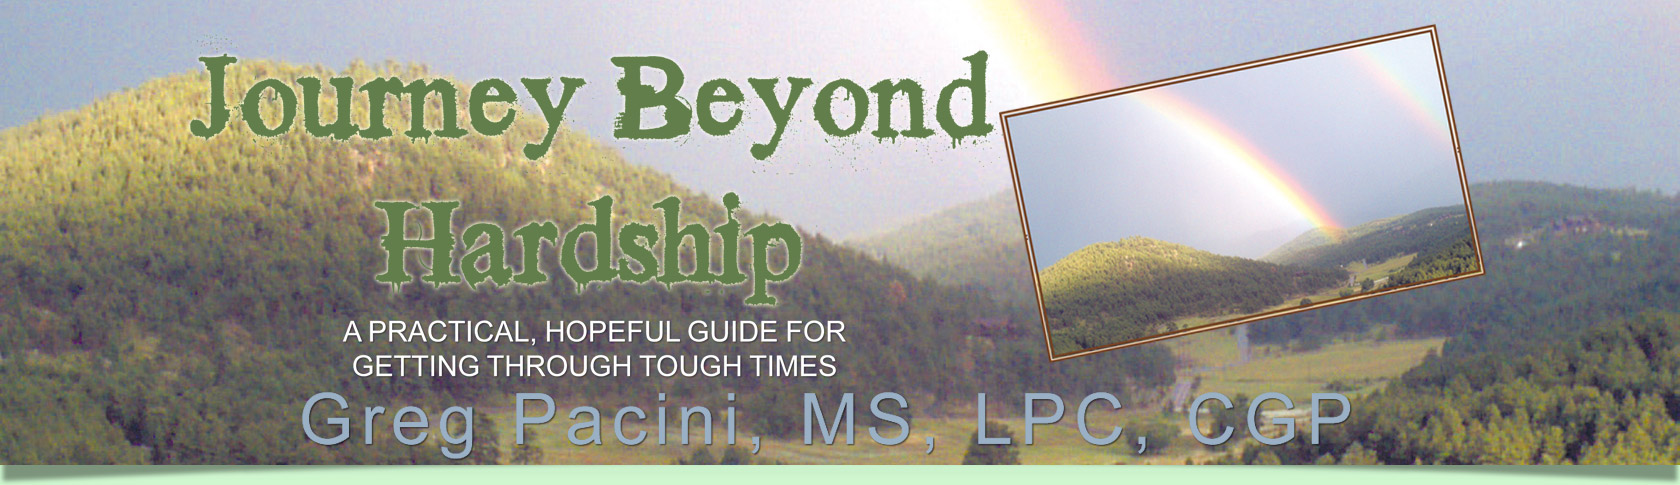 Journey Beyond Hardship by Greg Pacini, MS, LPC, CGP